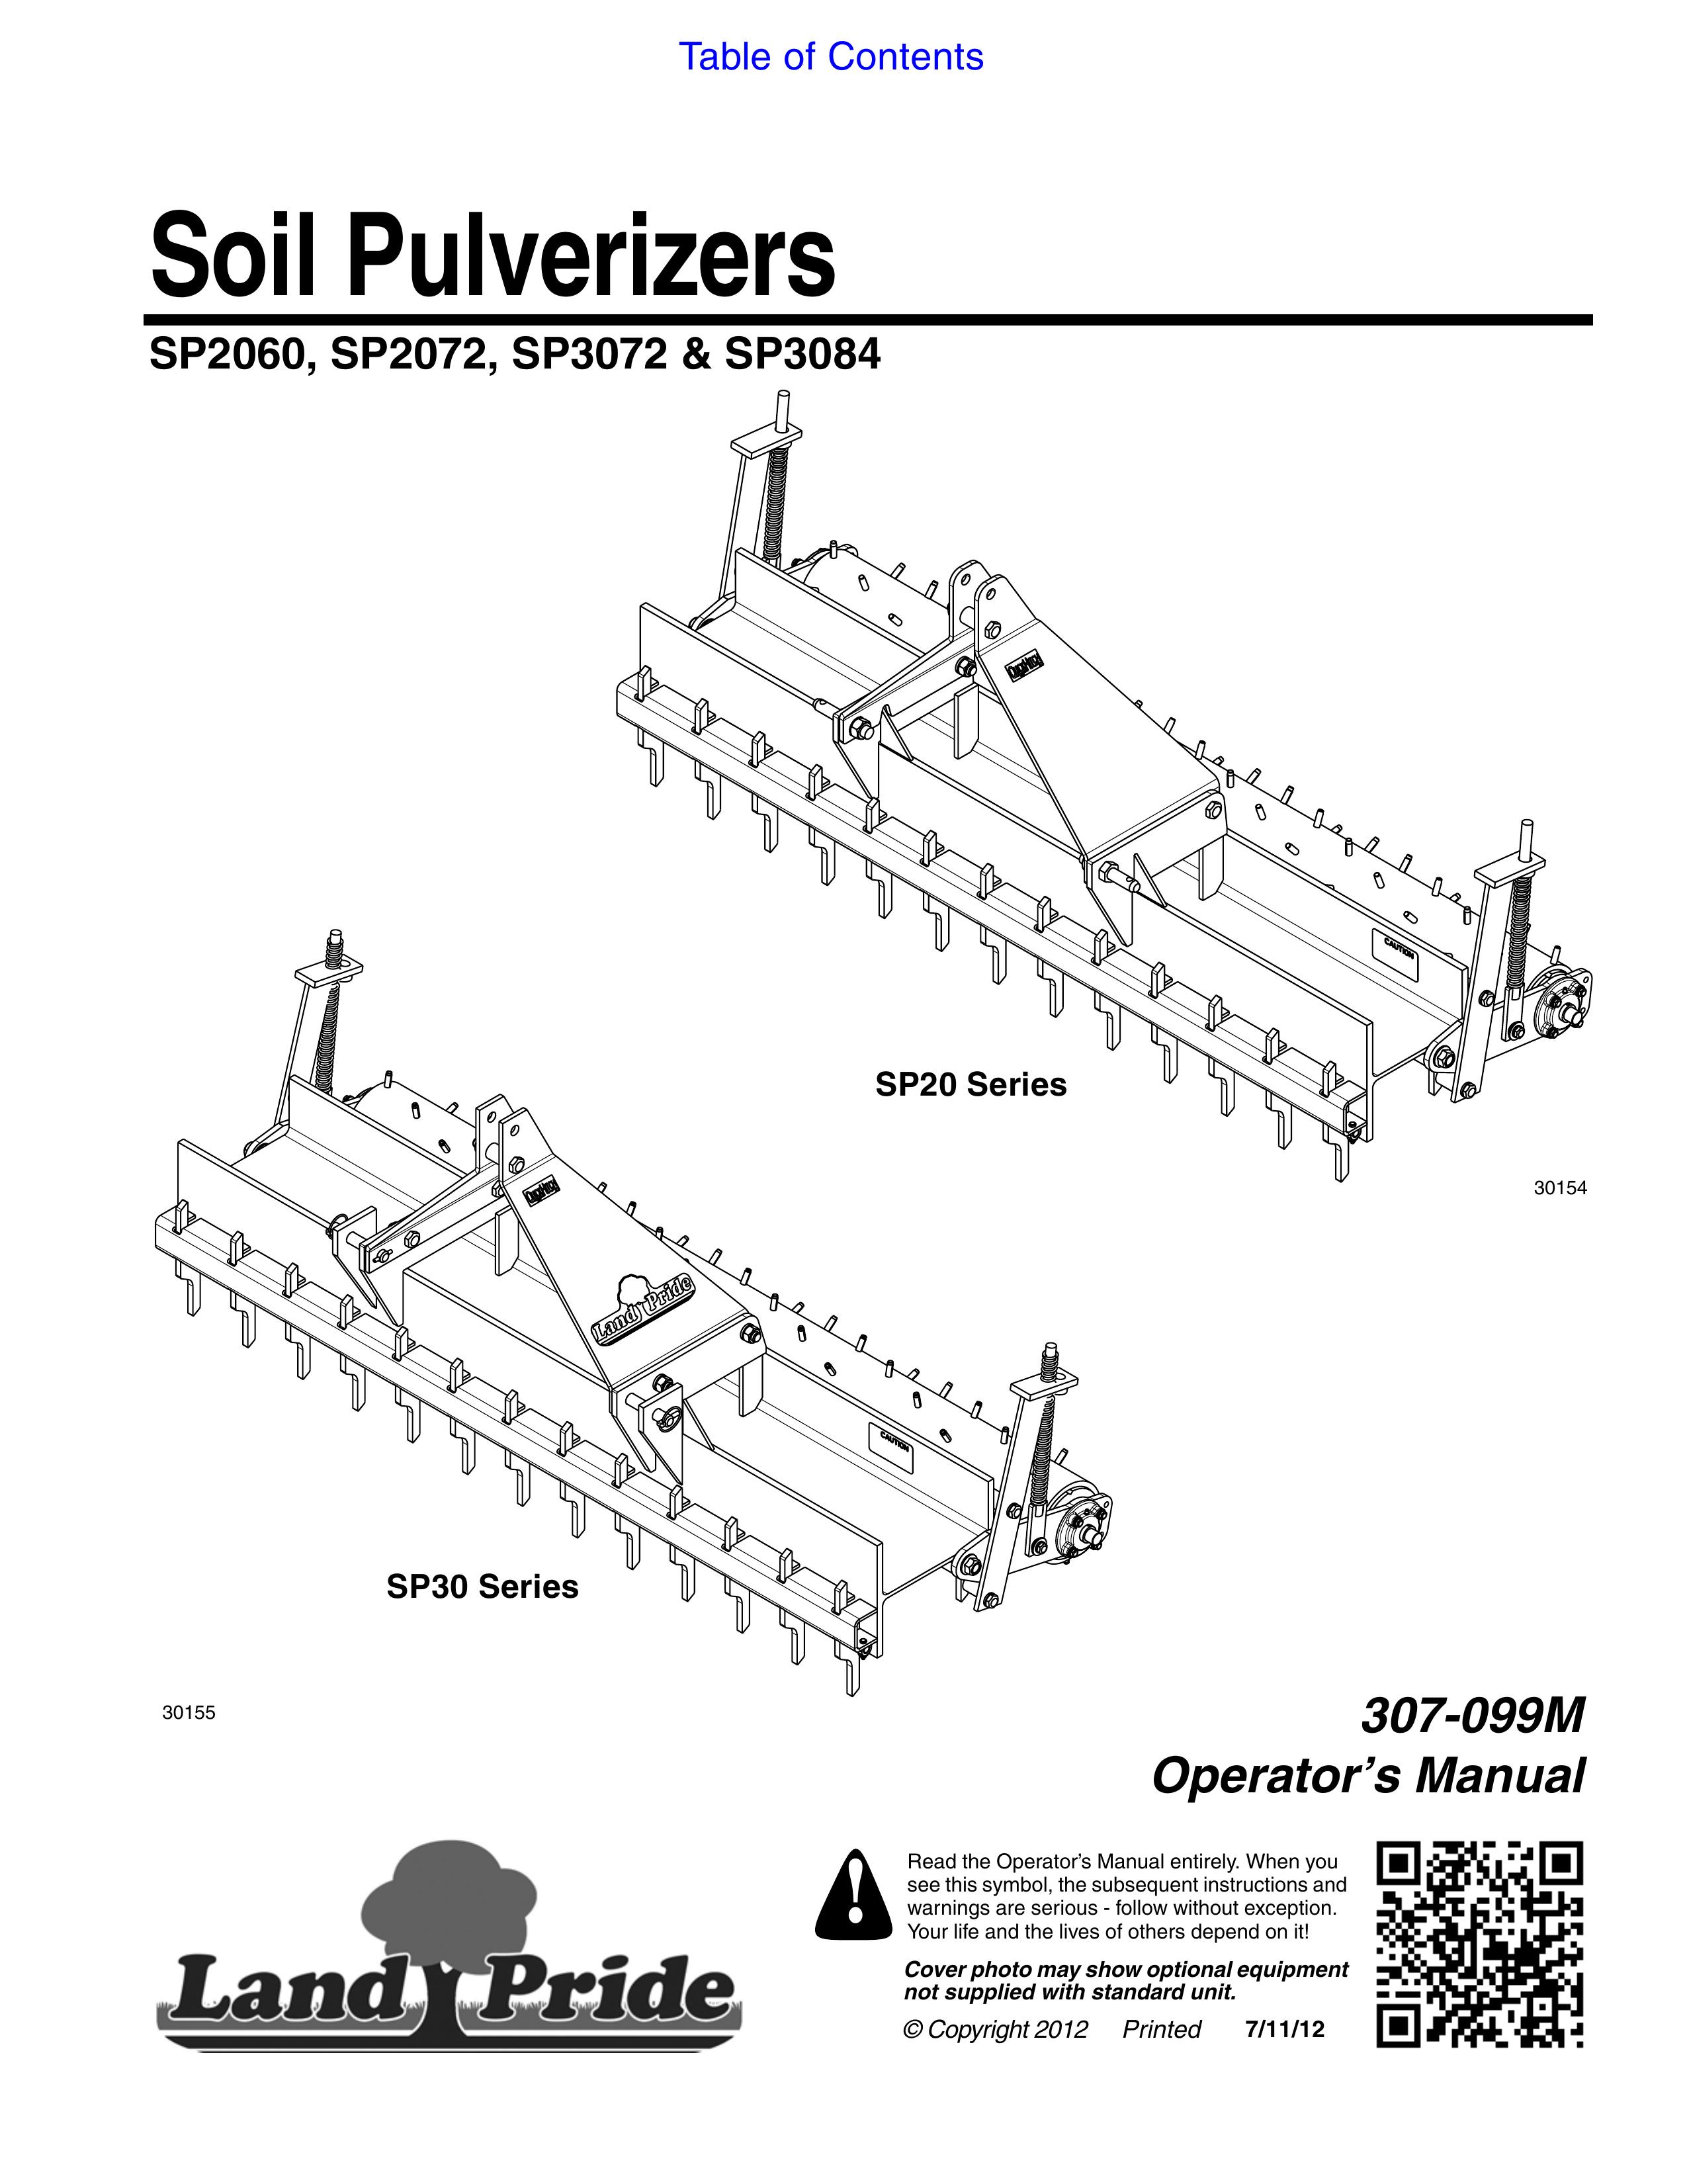 Land Pride SP3084 Lawn Aerator User Manual